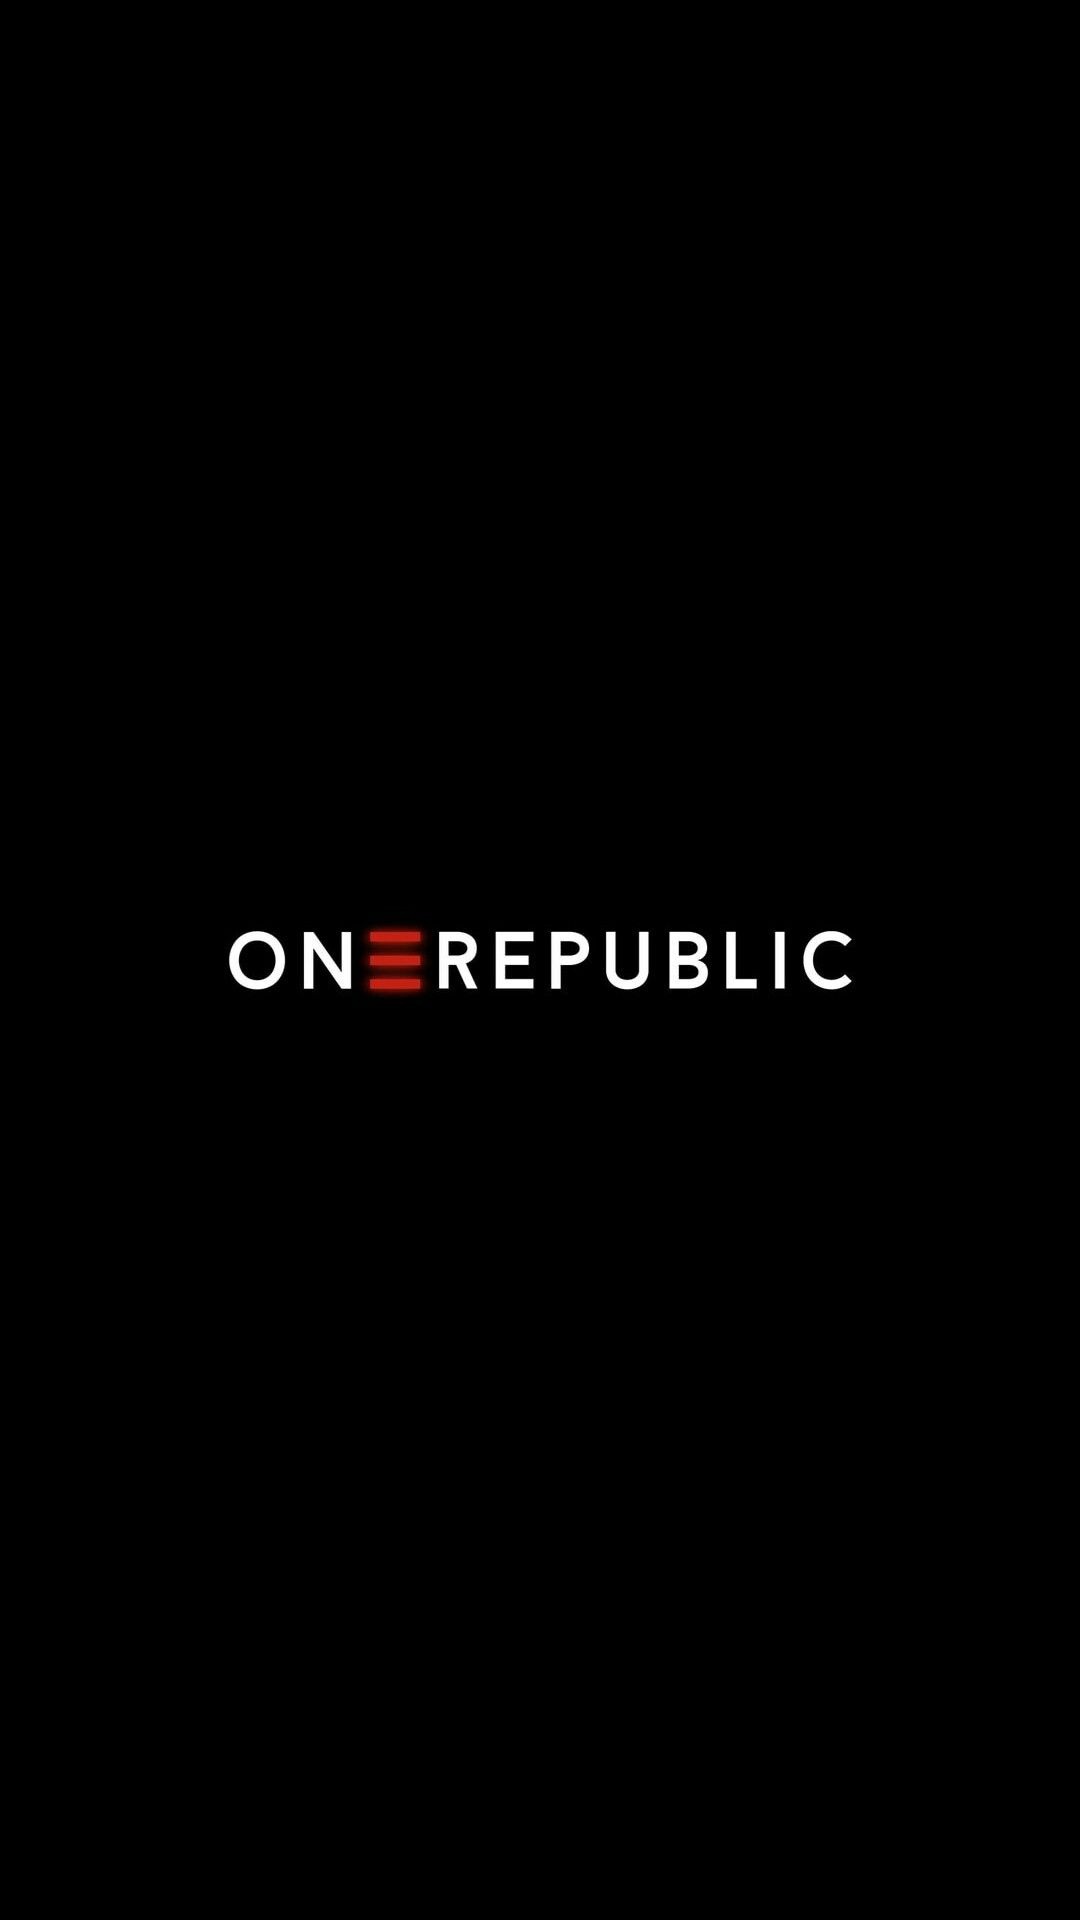 OneRepublic: An American pop rock band, Logo. 1080x1920 Full HD Background.